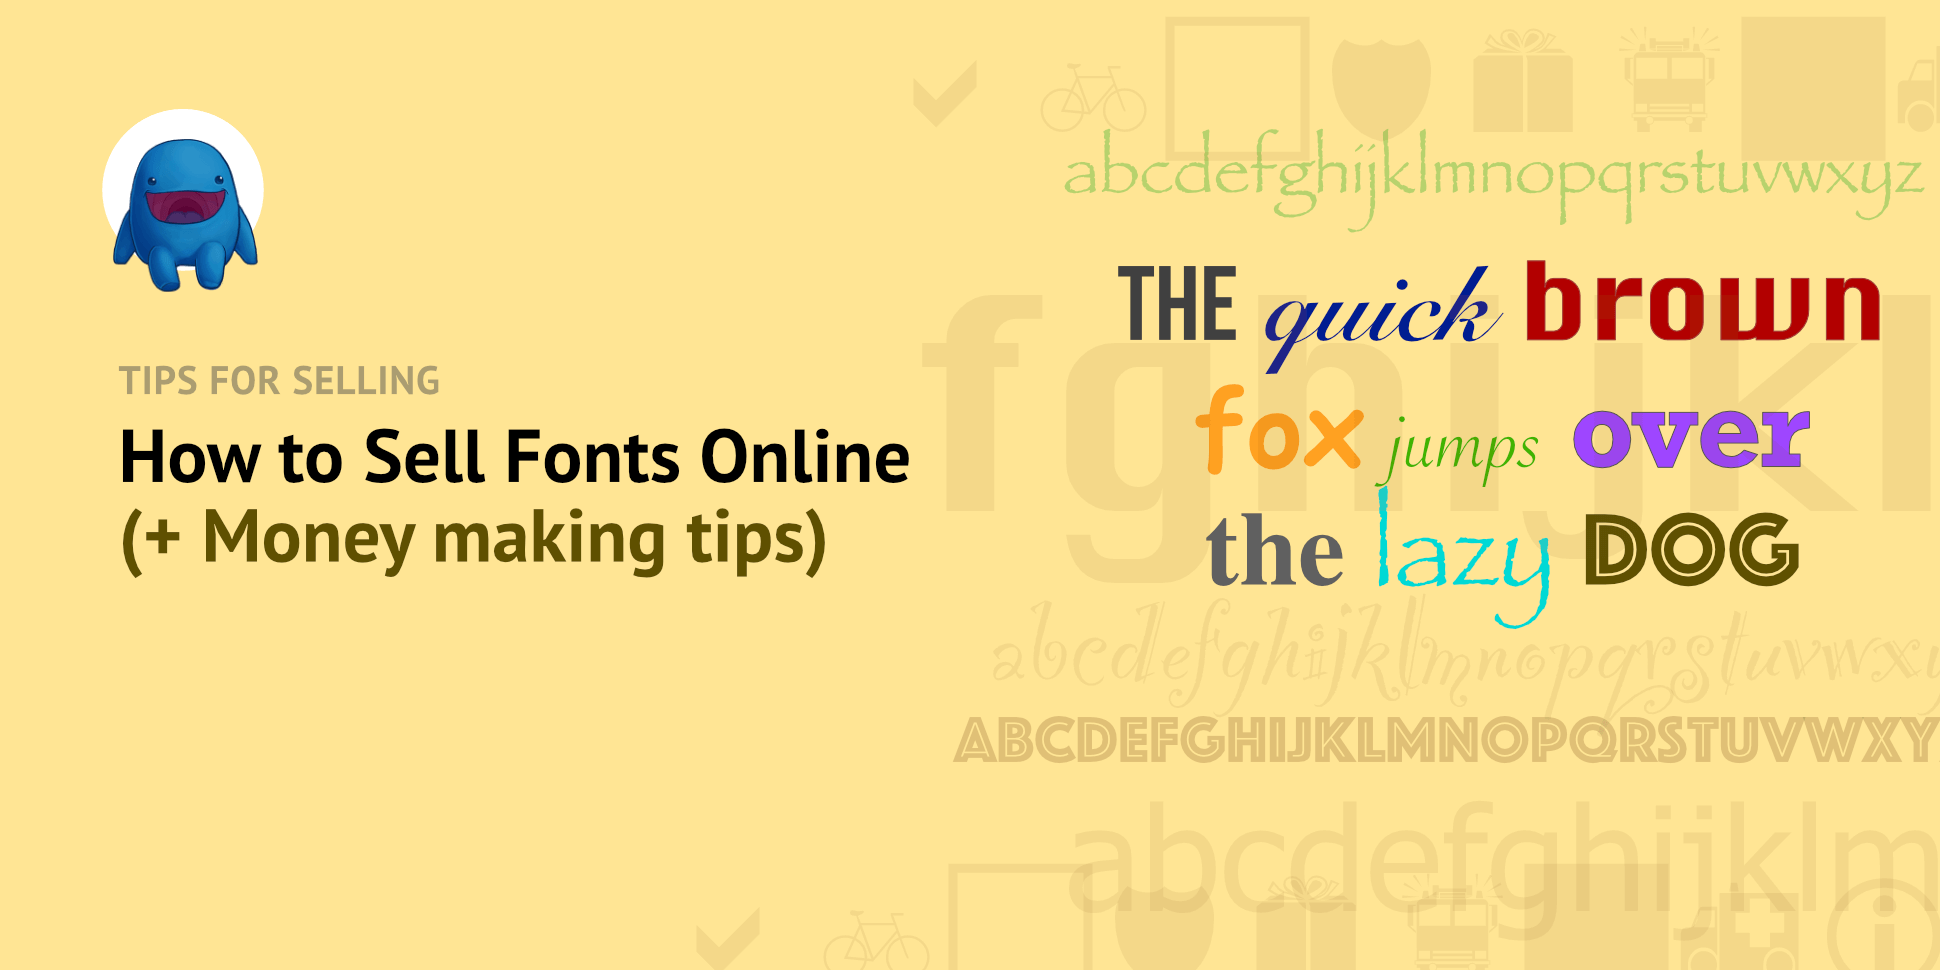 Illustration: A mix of fonts